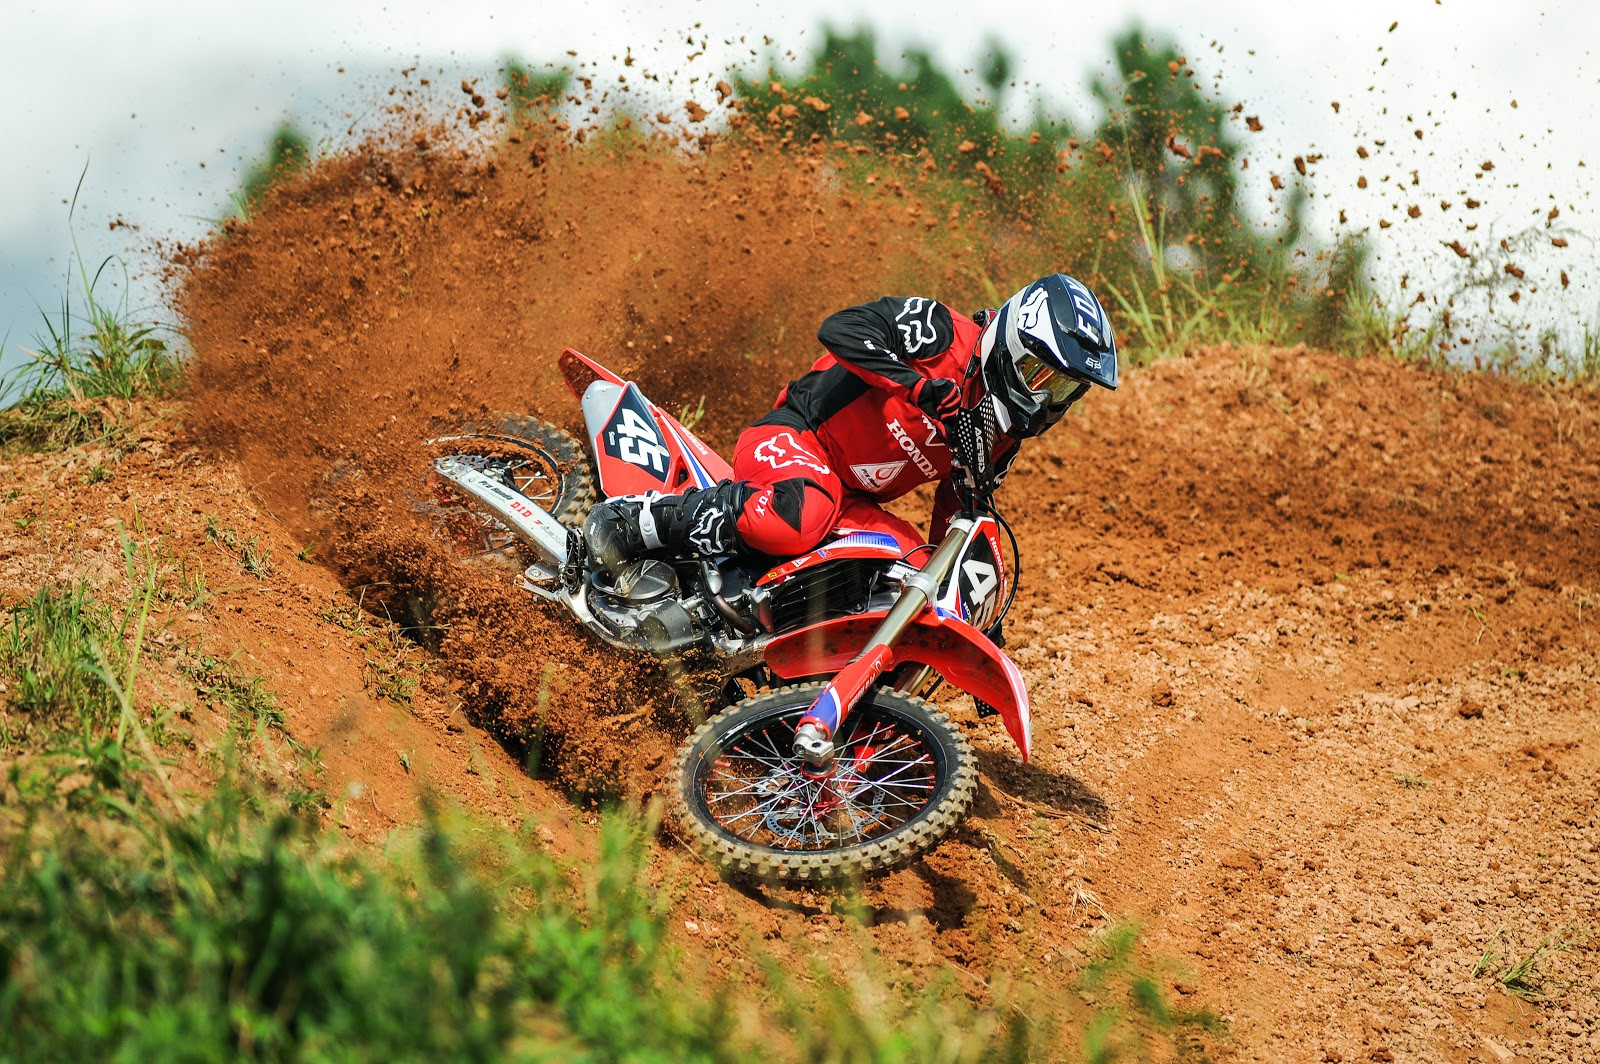 https://www.mx1.com.br/storage/blog/header/aygg_equipe-honda-racing-motocross-brasil-2021-mx1@original.jpeg